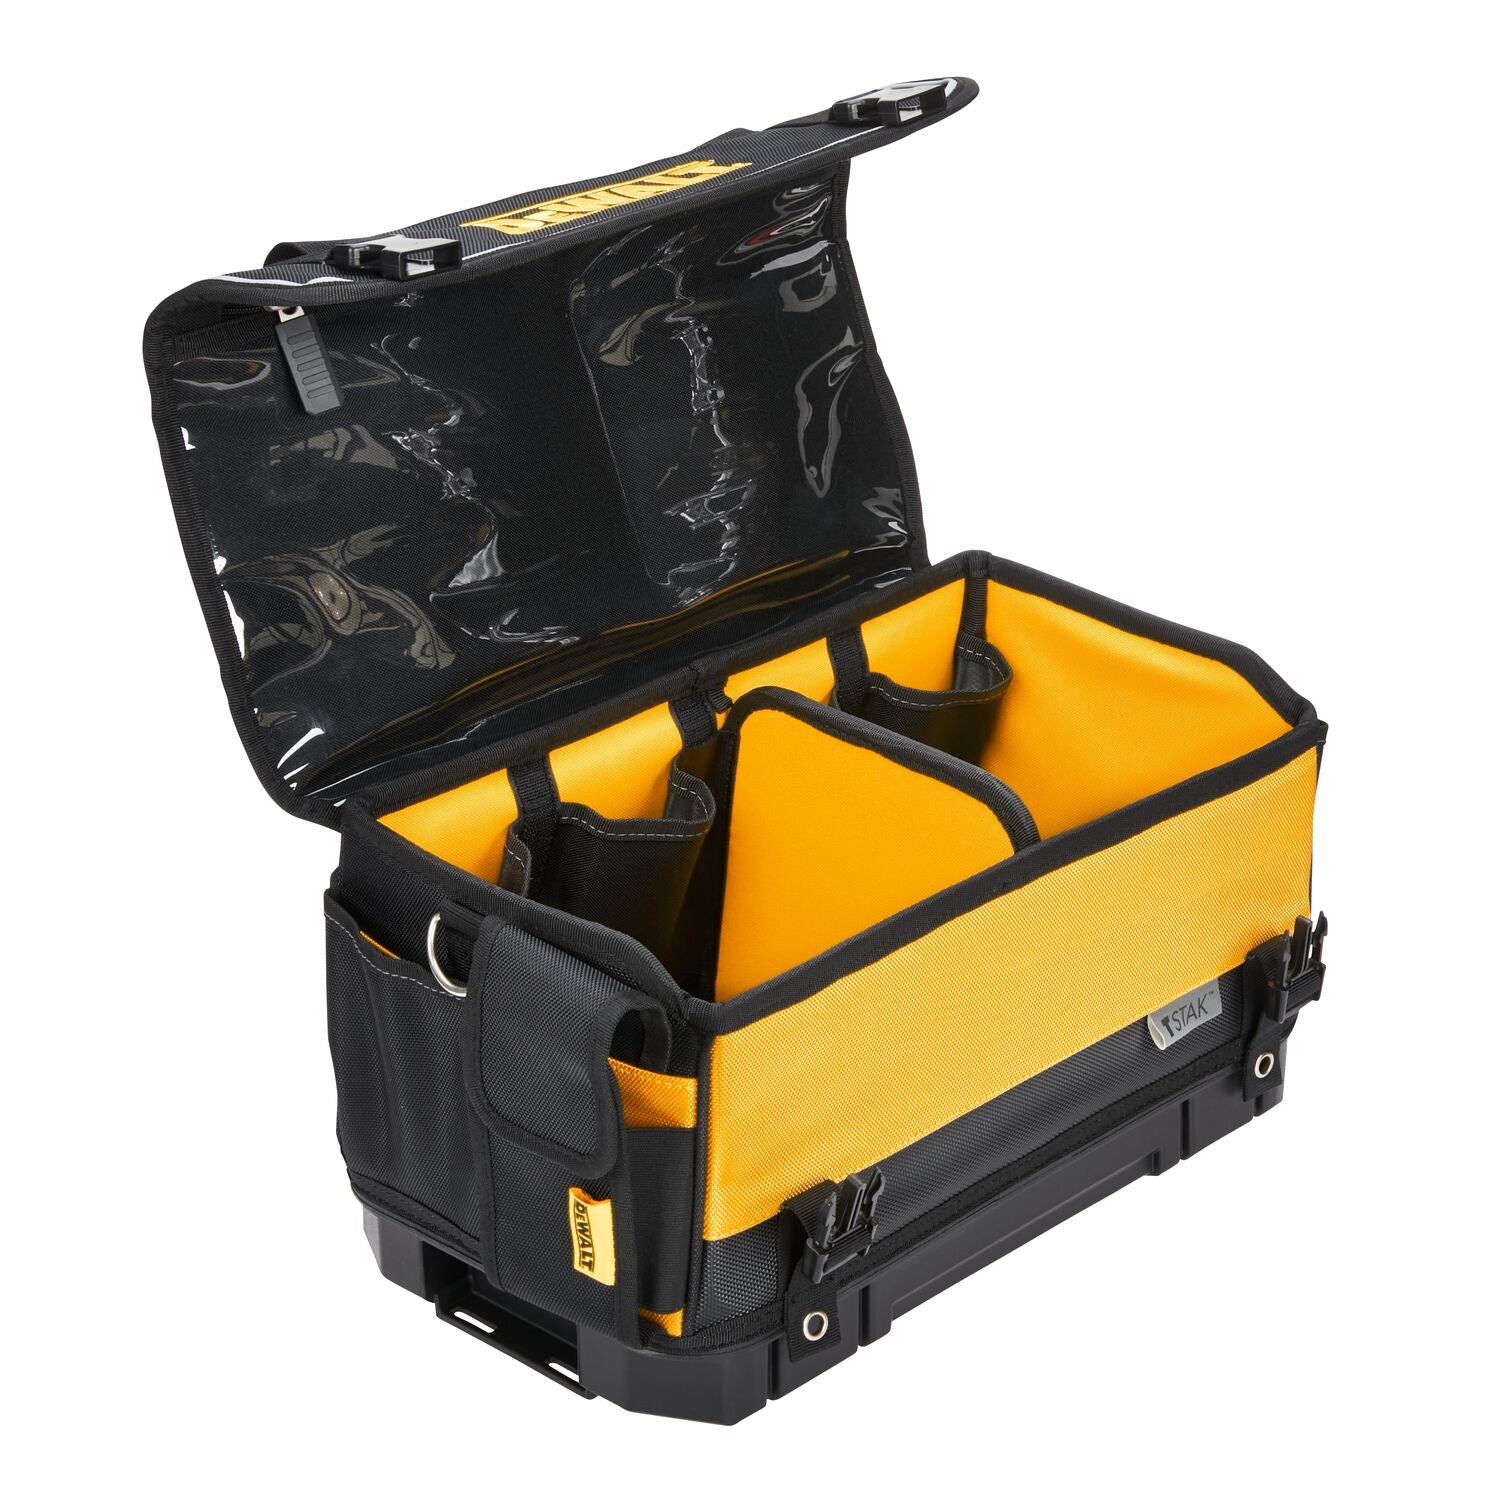 Dewalt DWST17623 - TSTAK® Covered Tool Bag